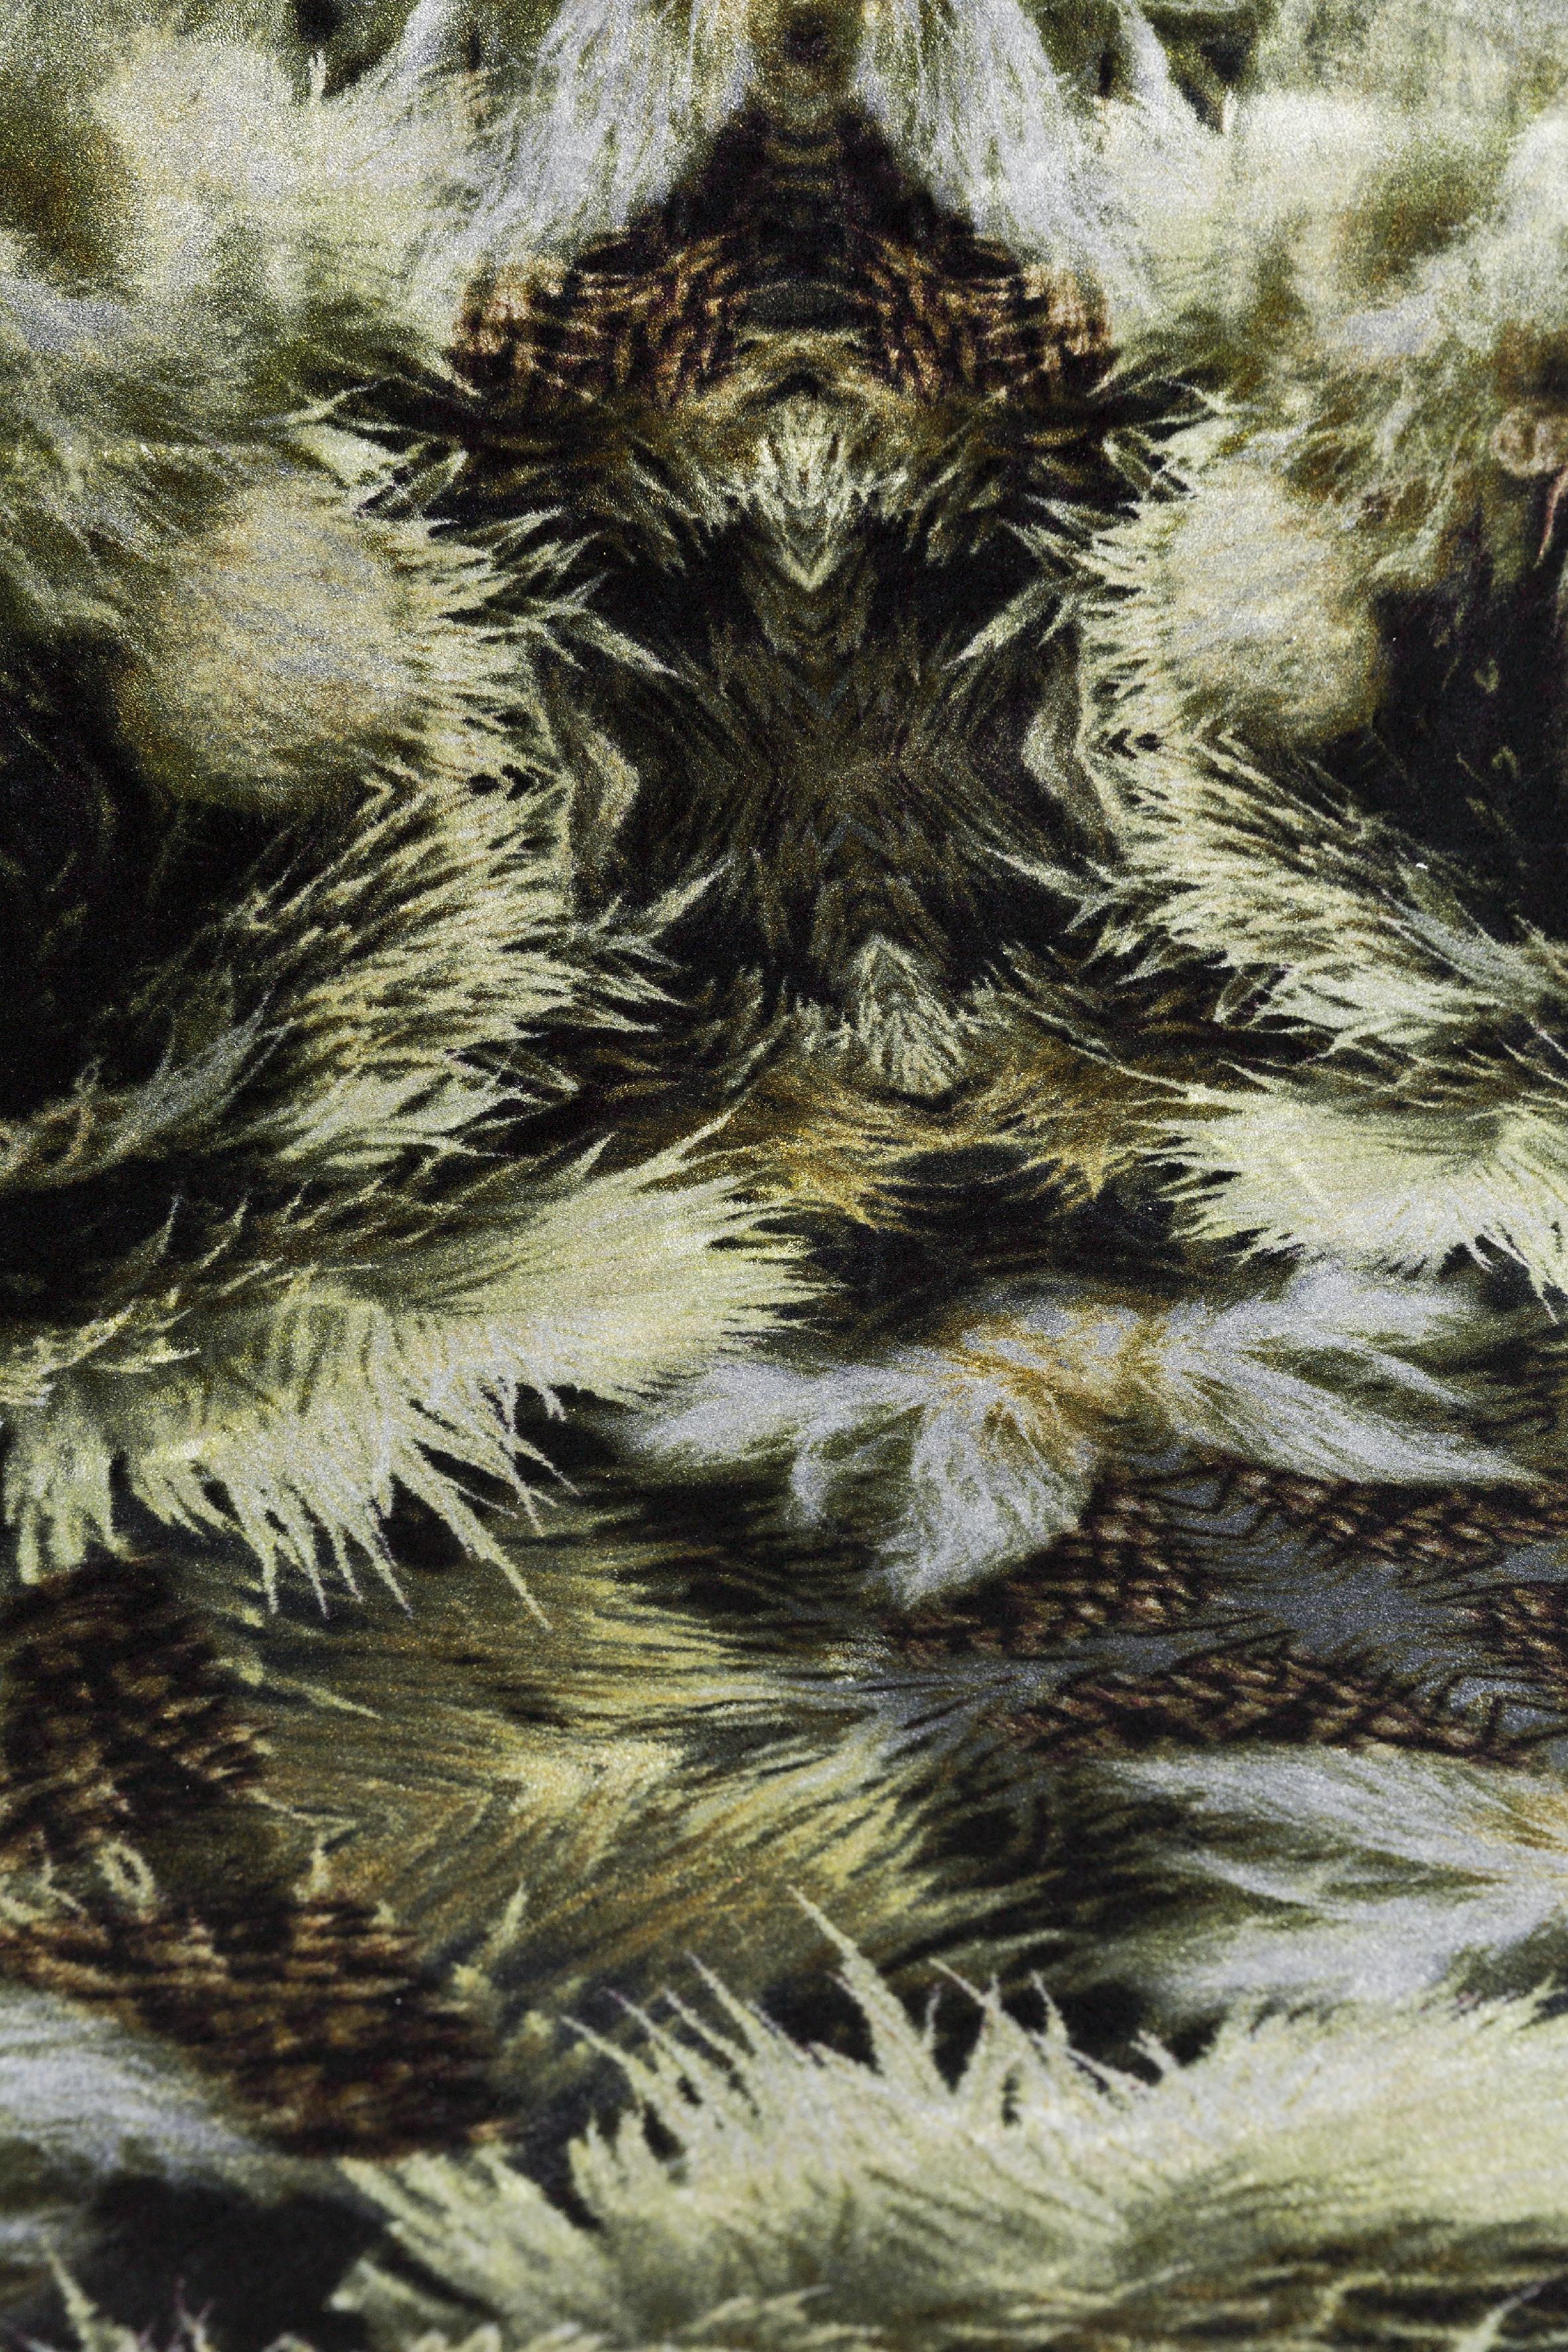 Moooi small extinct animals blushing sloth rug in wool.

